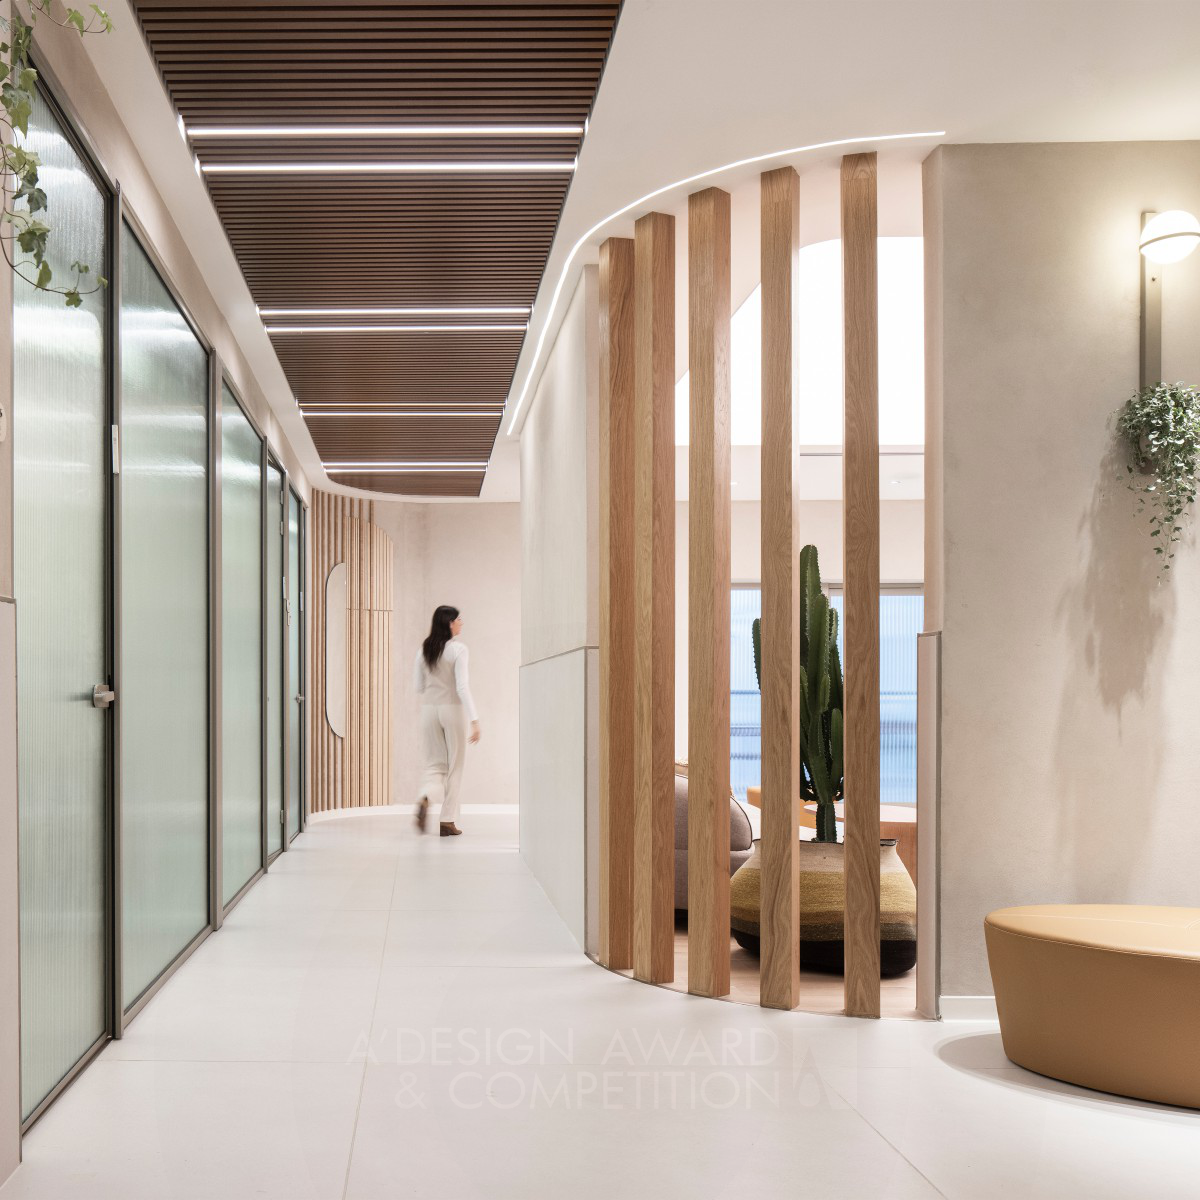 Longevity Oasis Clinic Interior Design by Studio Tali Gotthilf